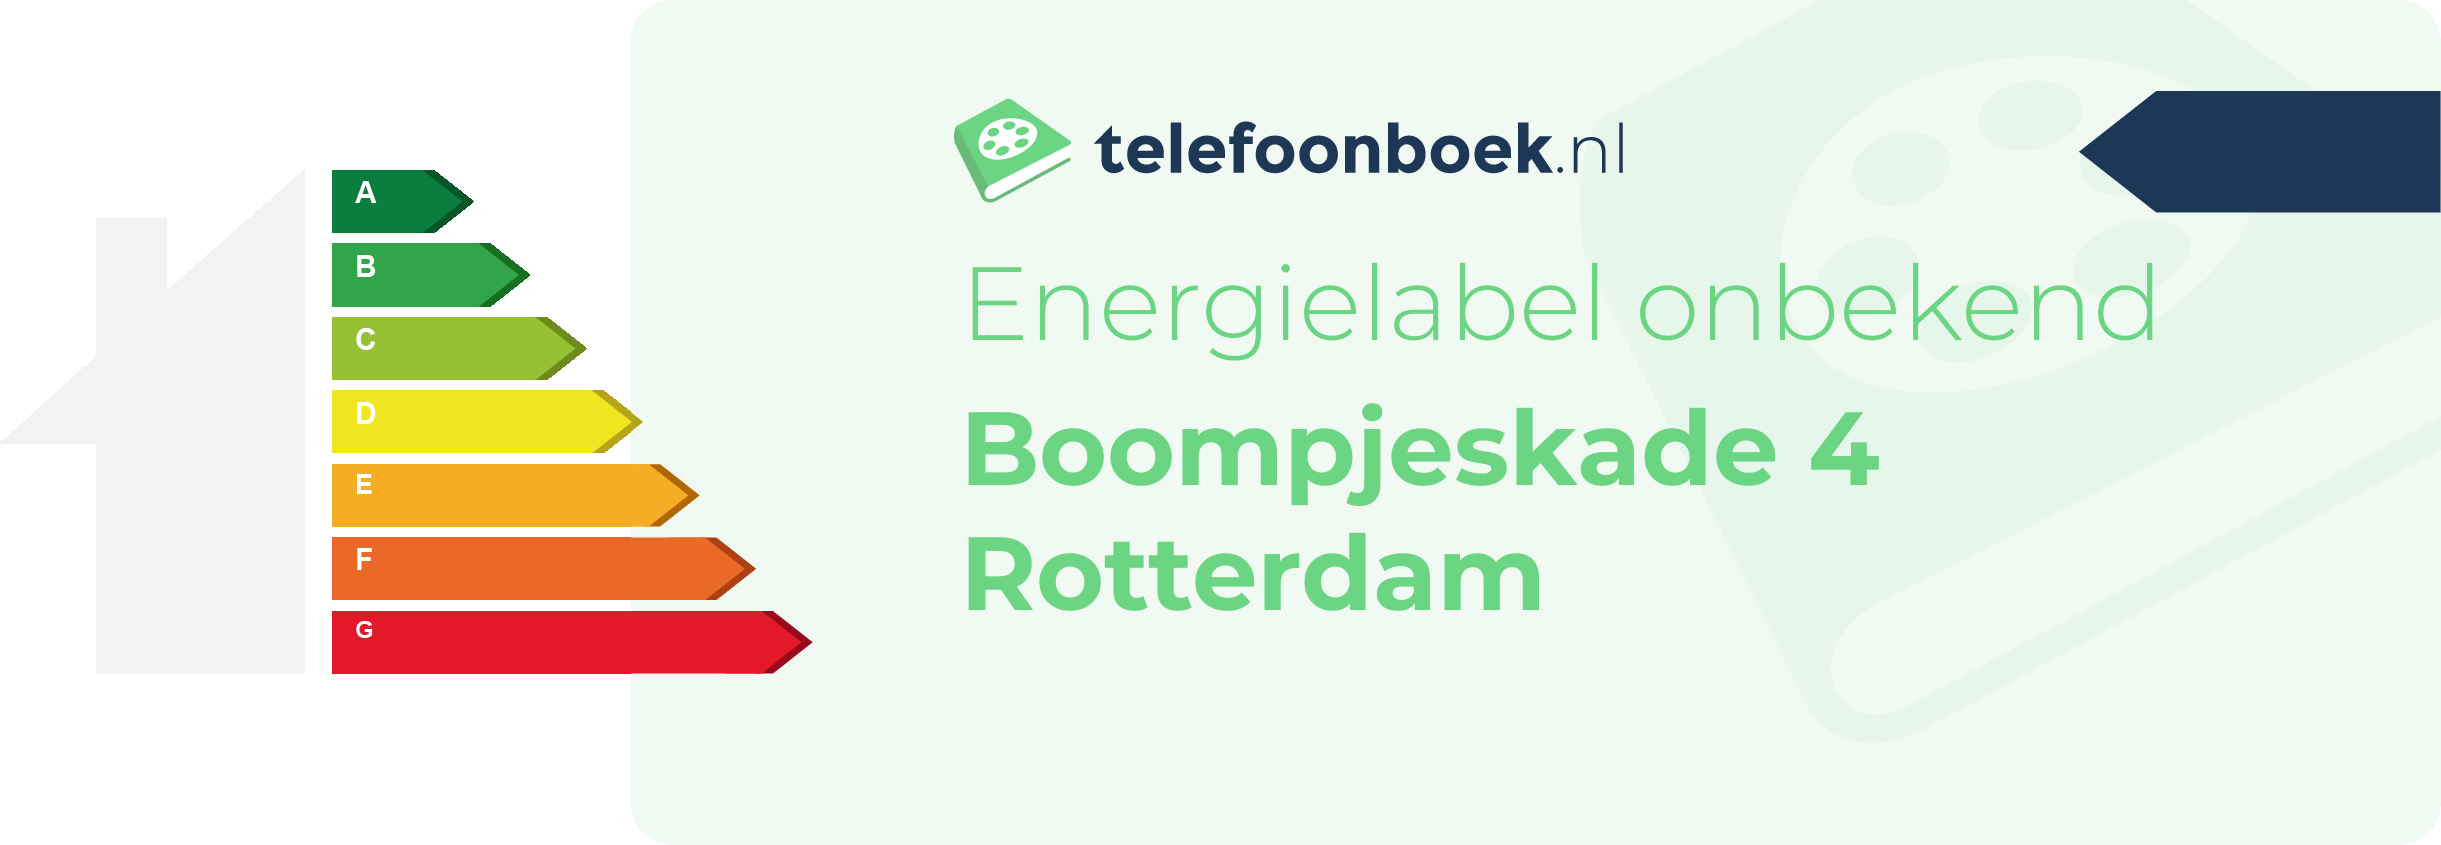 Energielabel Boompjeskade 4 Rotterdam